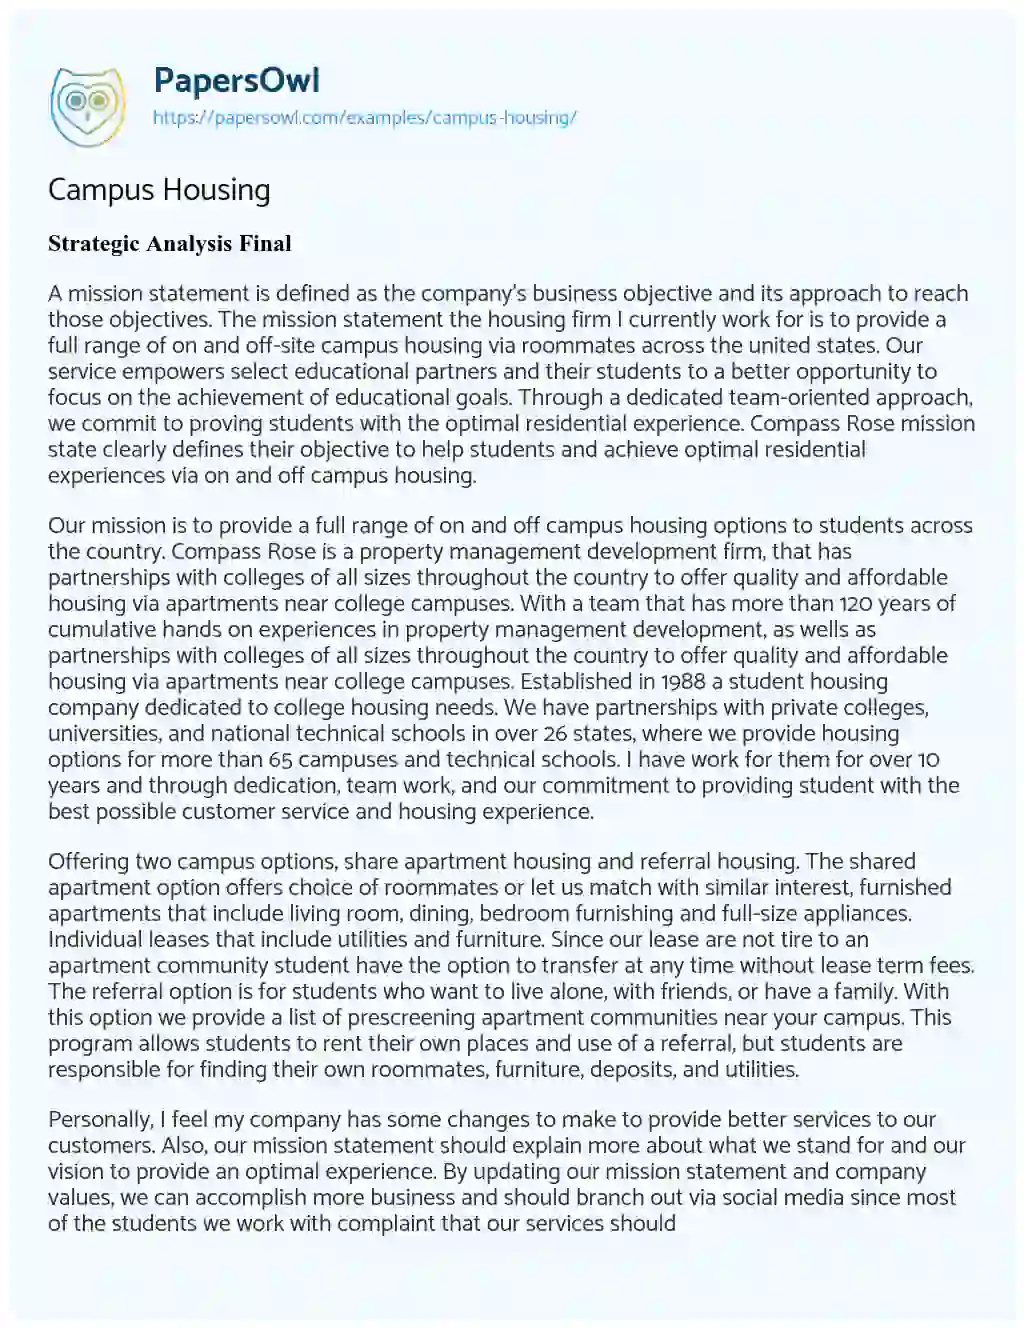 Essay on Campus Housing